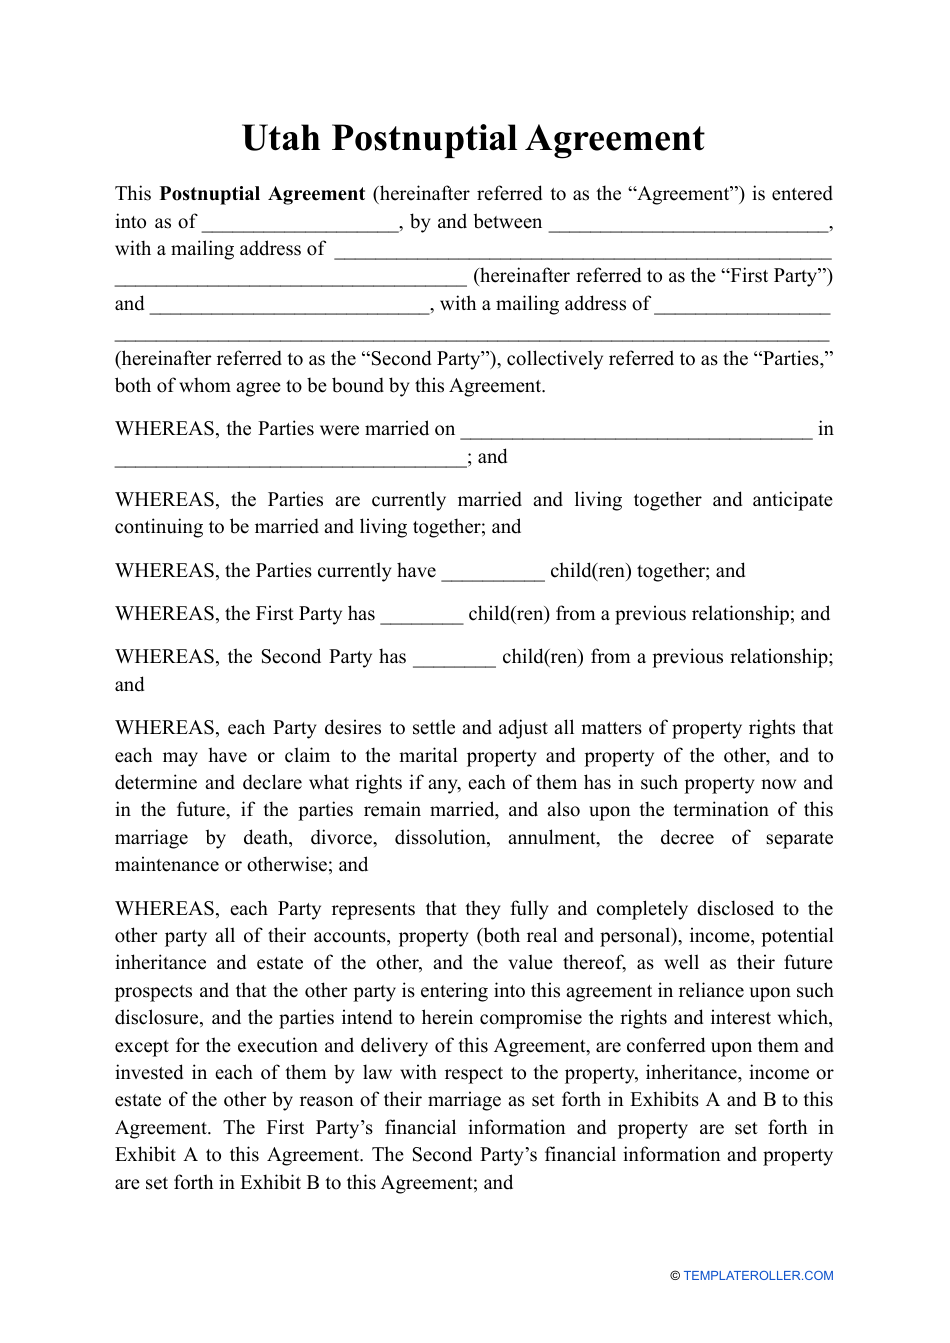 Postnuptial Agreement Template - Utah, Page 1